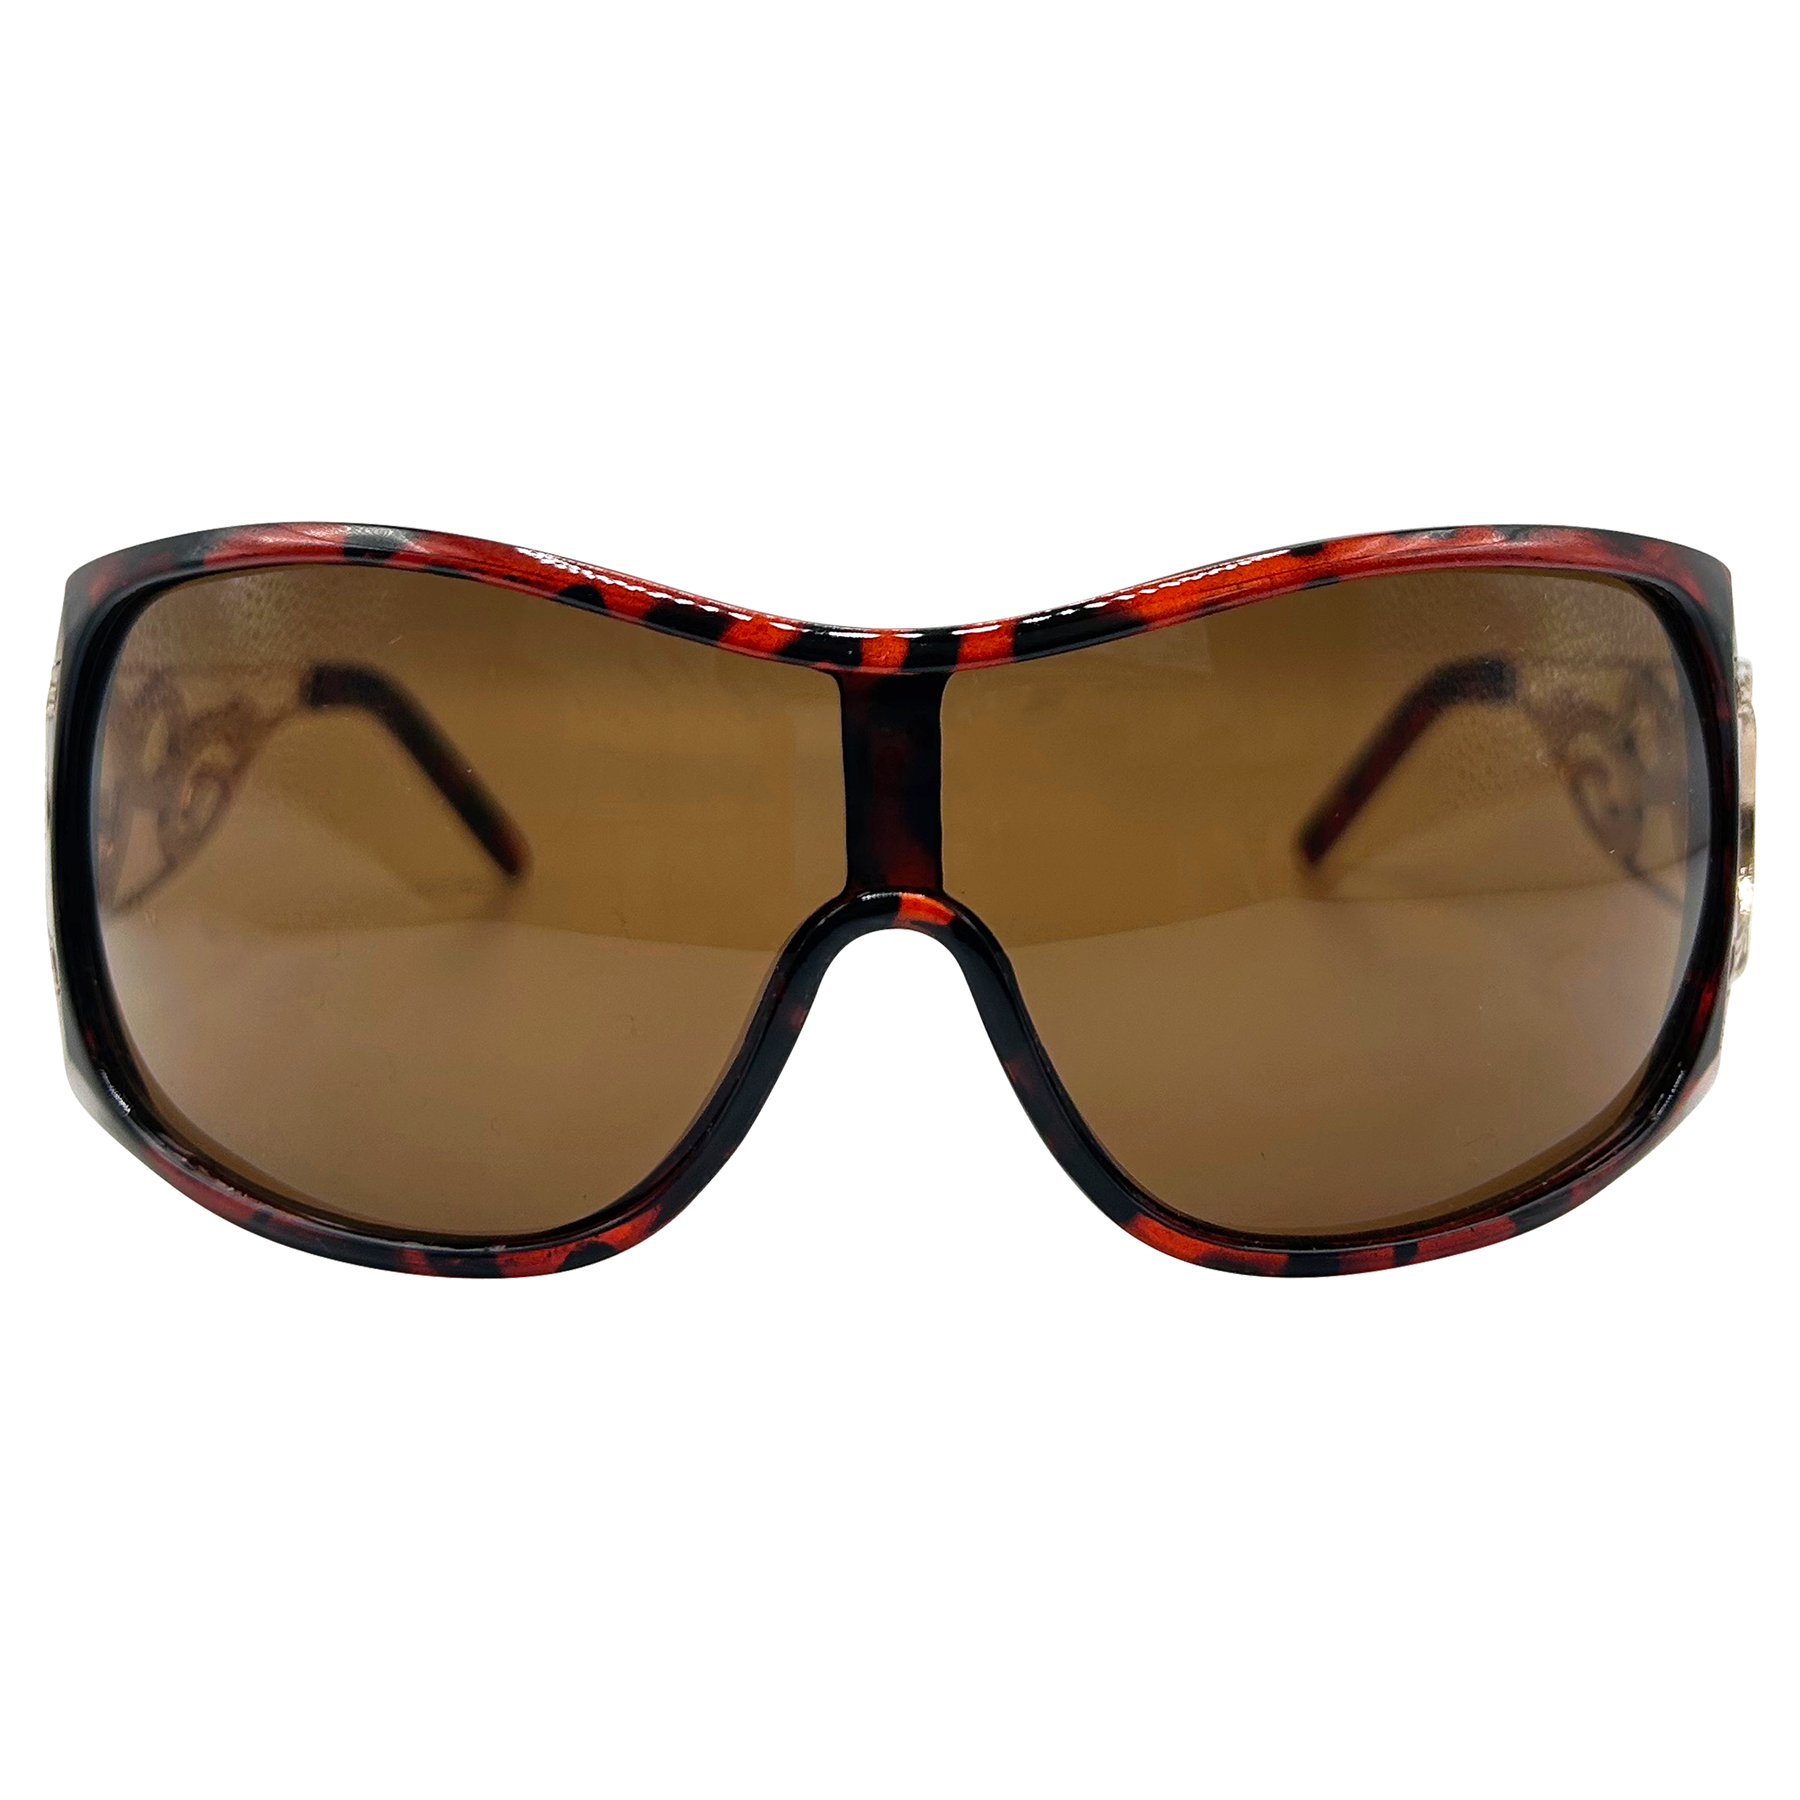 TURBULENCE Shield Sunglasses With Snake Detail